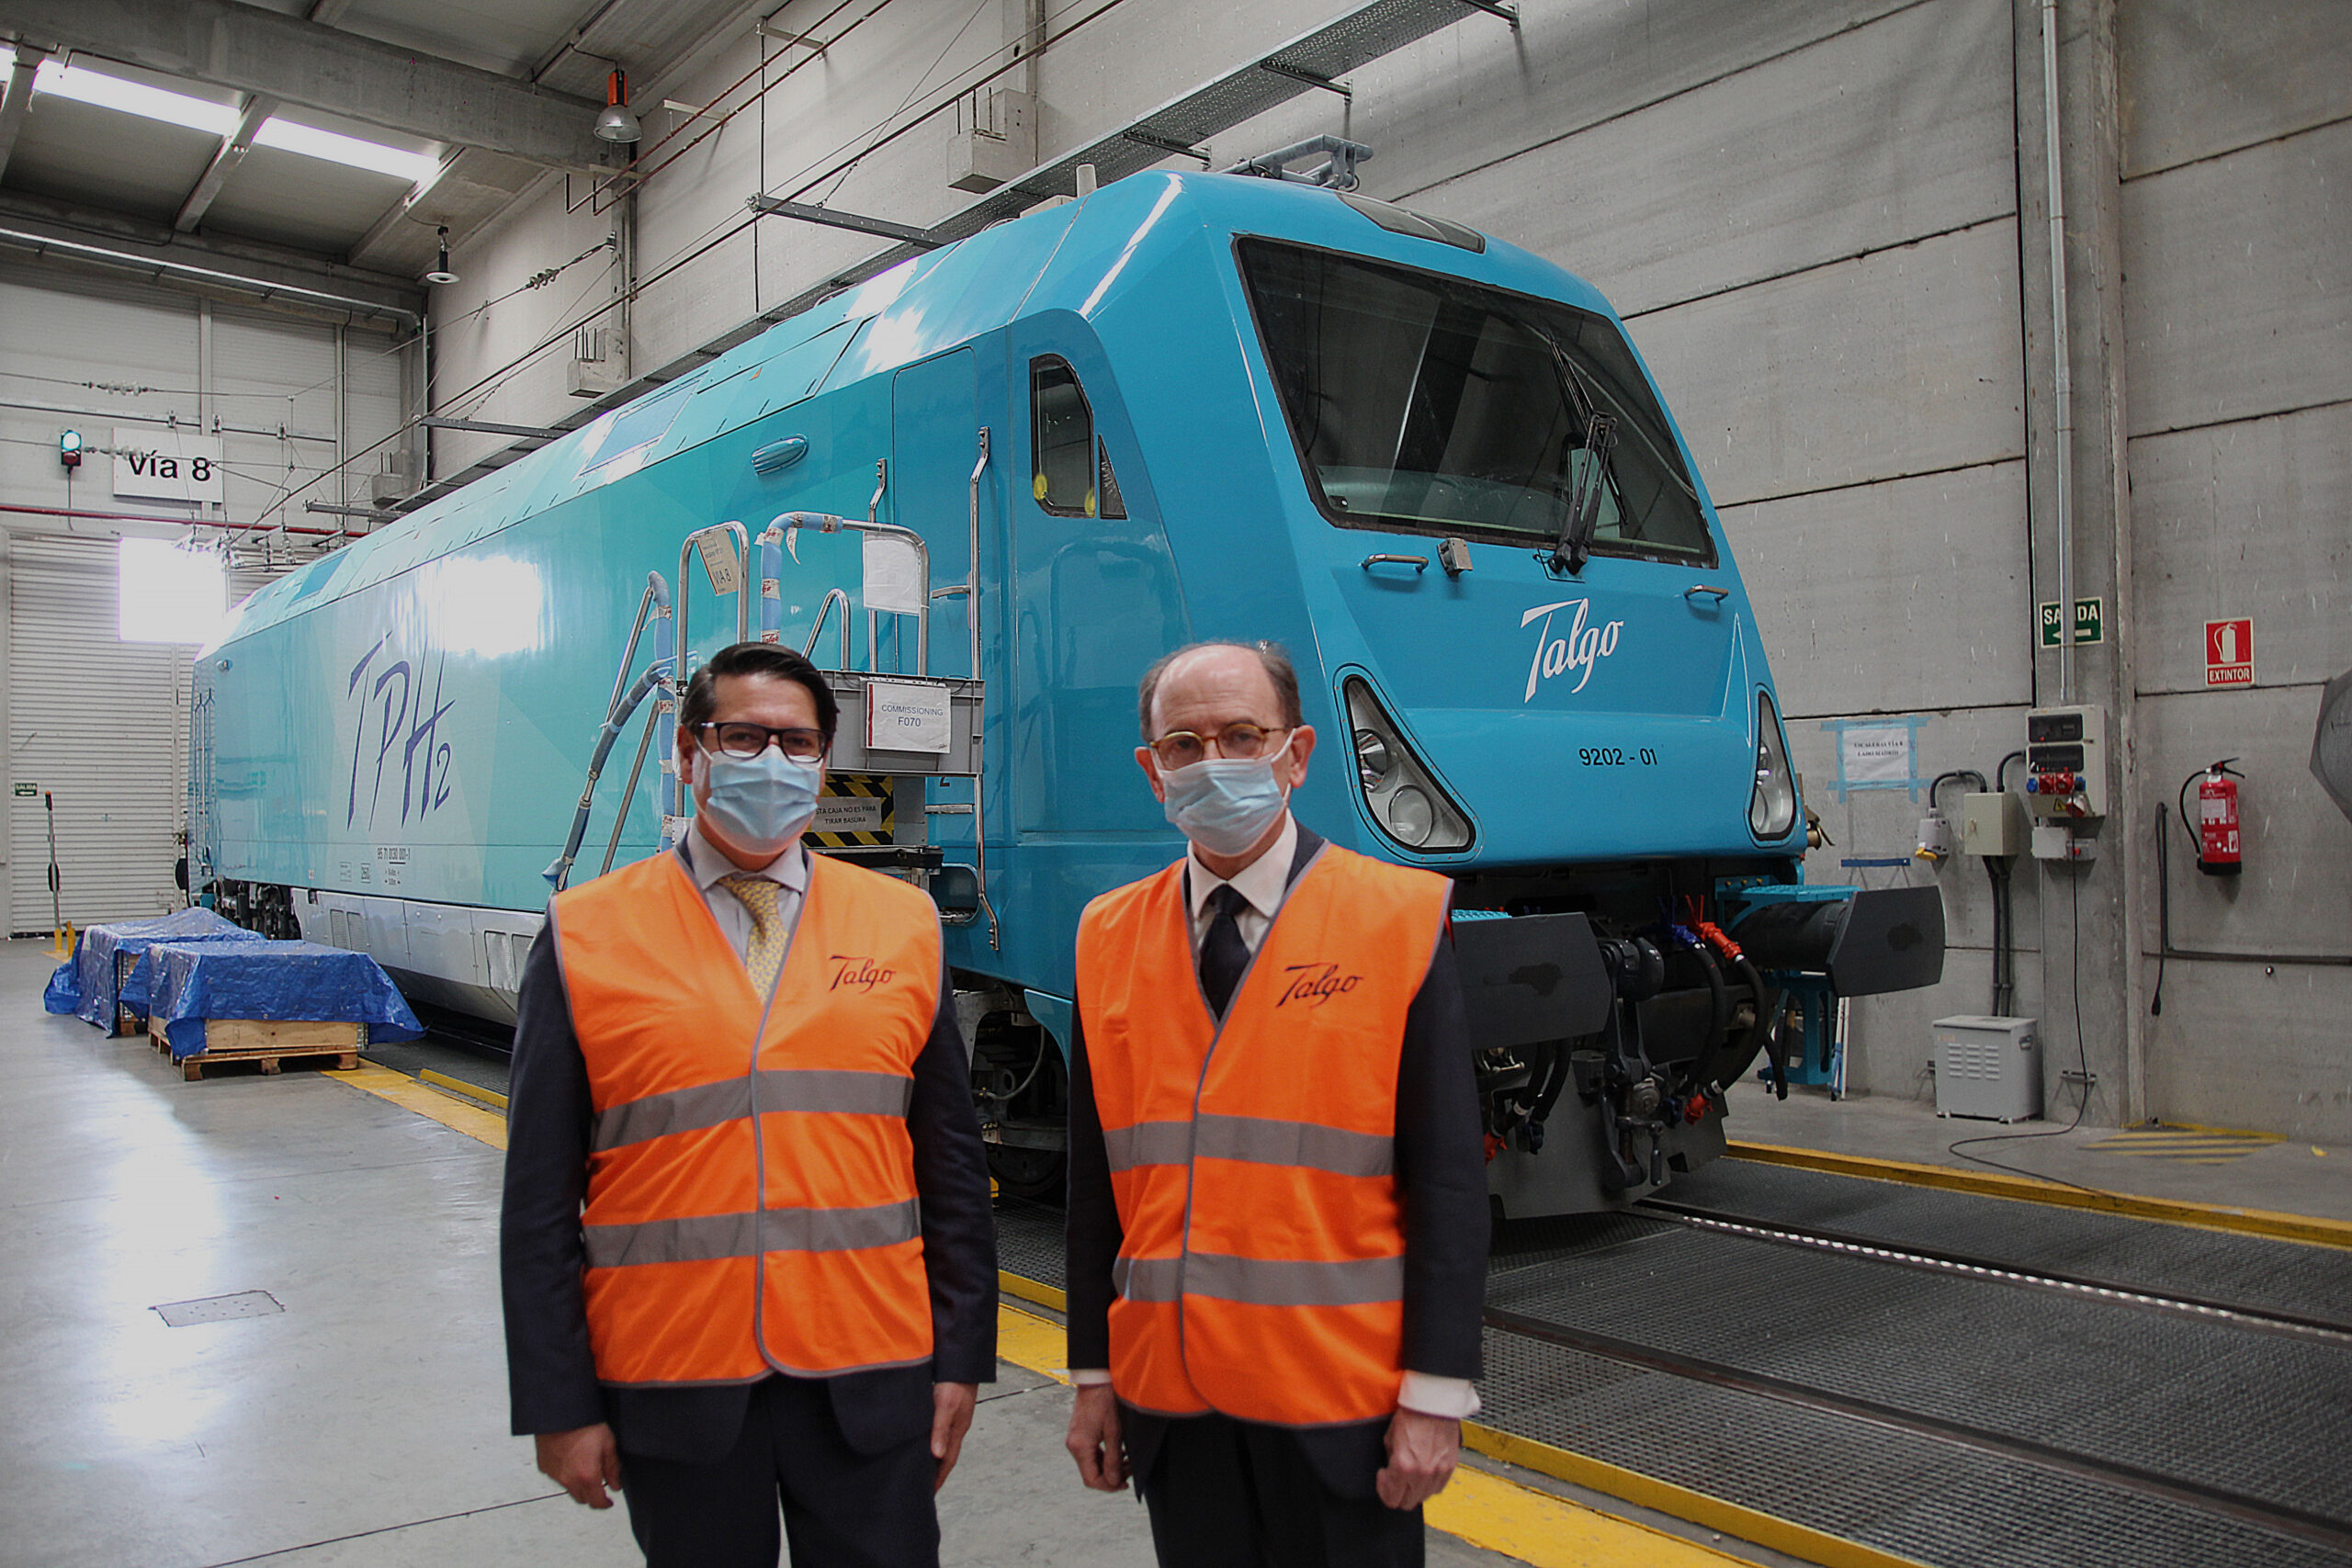 EIB Vice President Ricardo Mourinho Félix (left) and Talgo President Carlos Palacio (right) in front of the TPH2 hydrogen locomotive